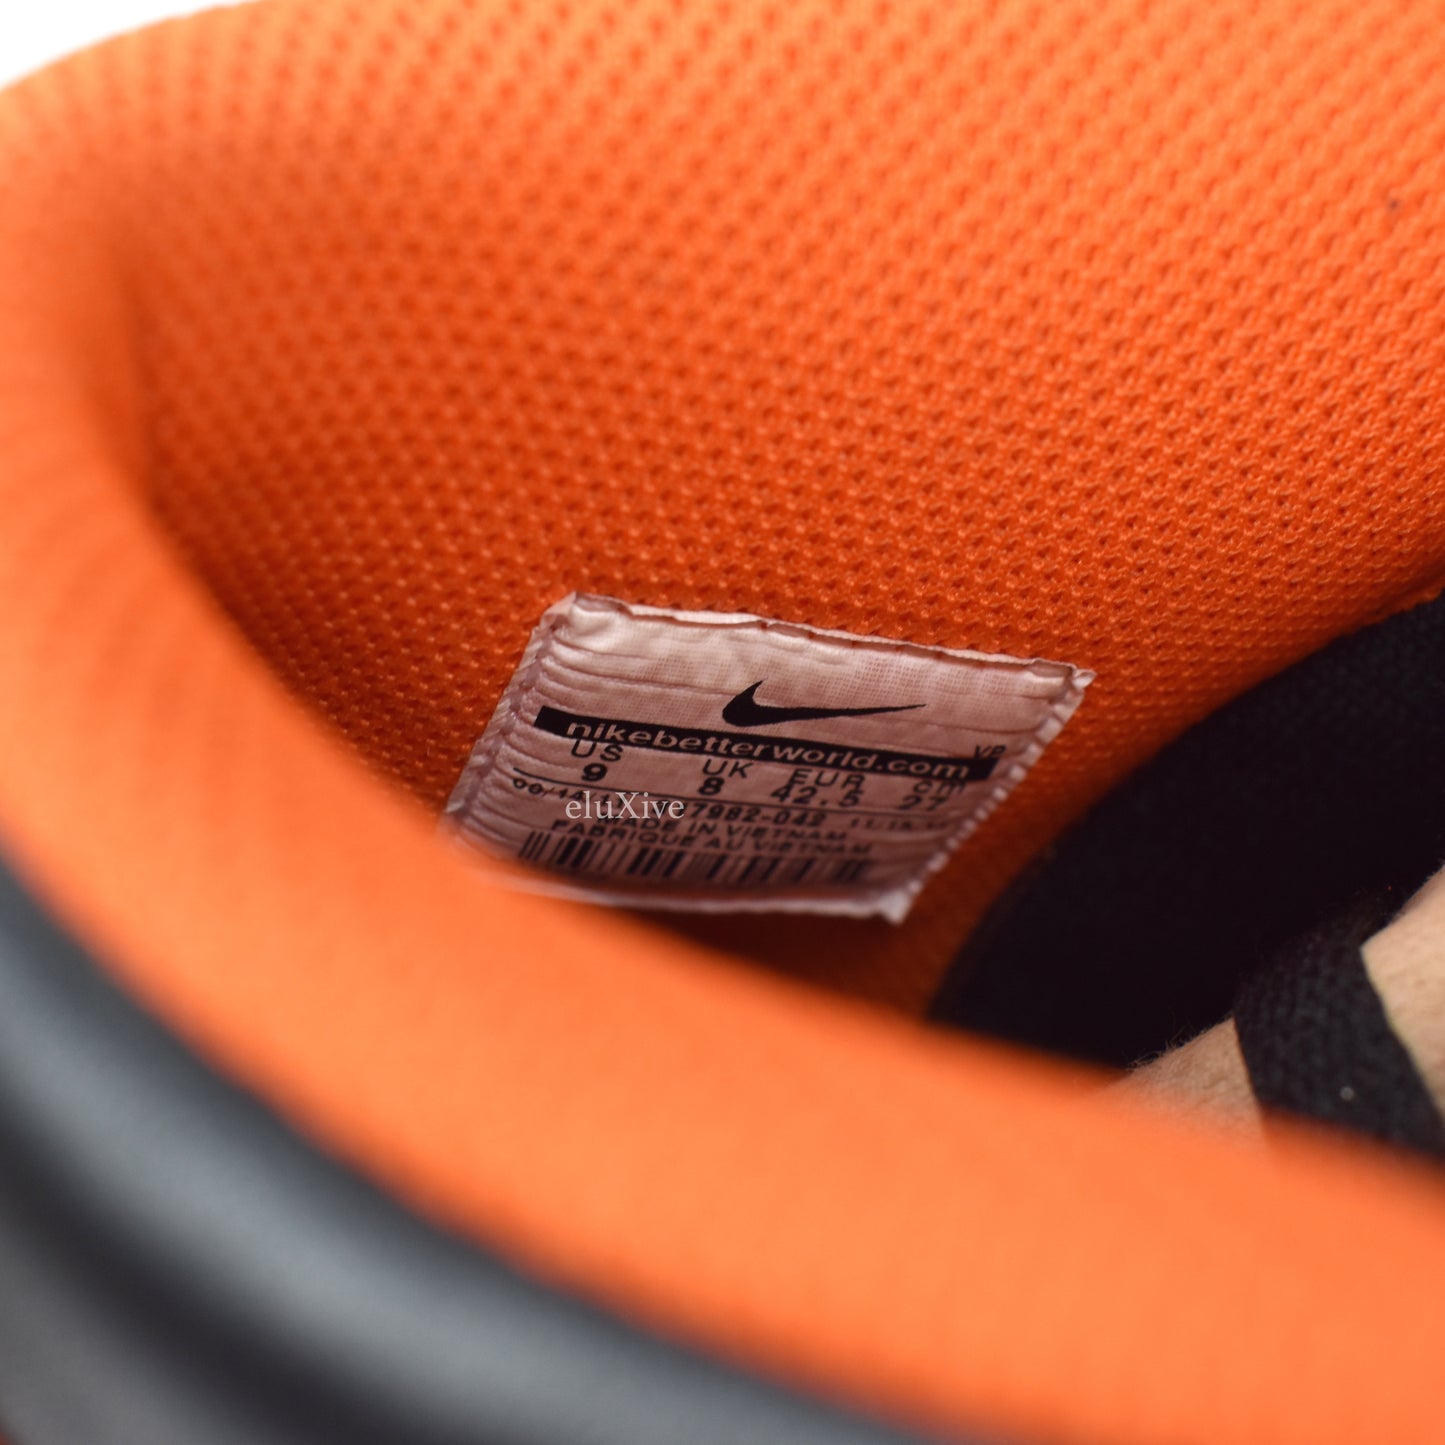 Nike - Dunk High 'Syracuse Black Pack' (Safety Orange)